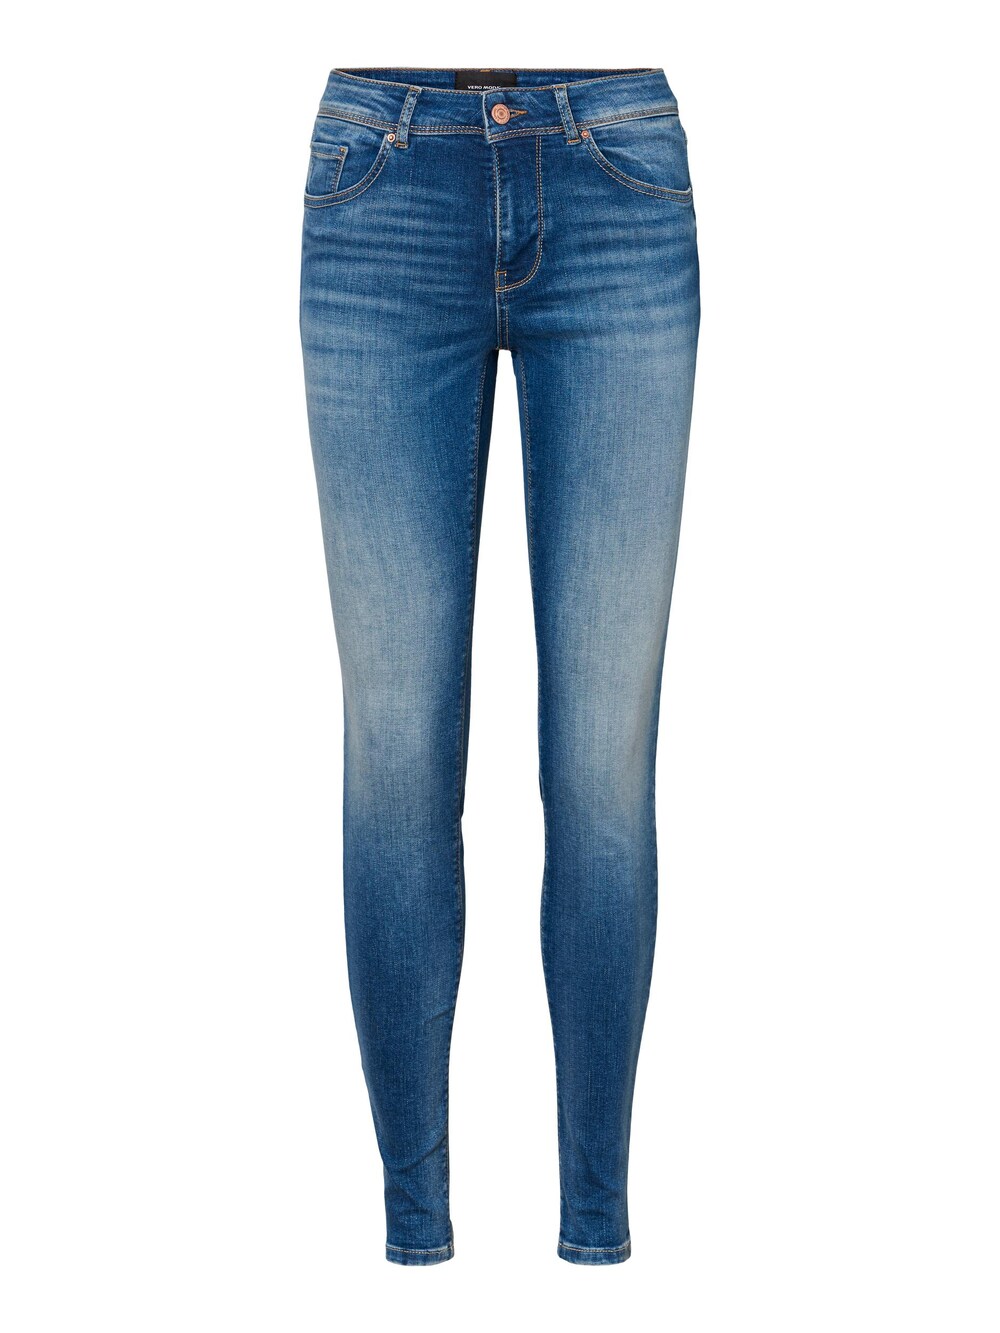 Узкие джинсы Vero Moda Lux, синий